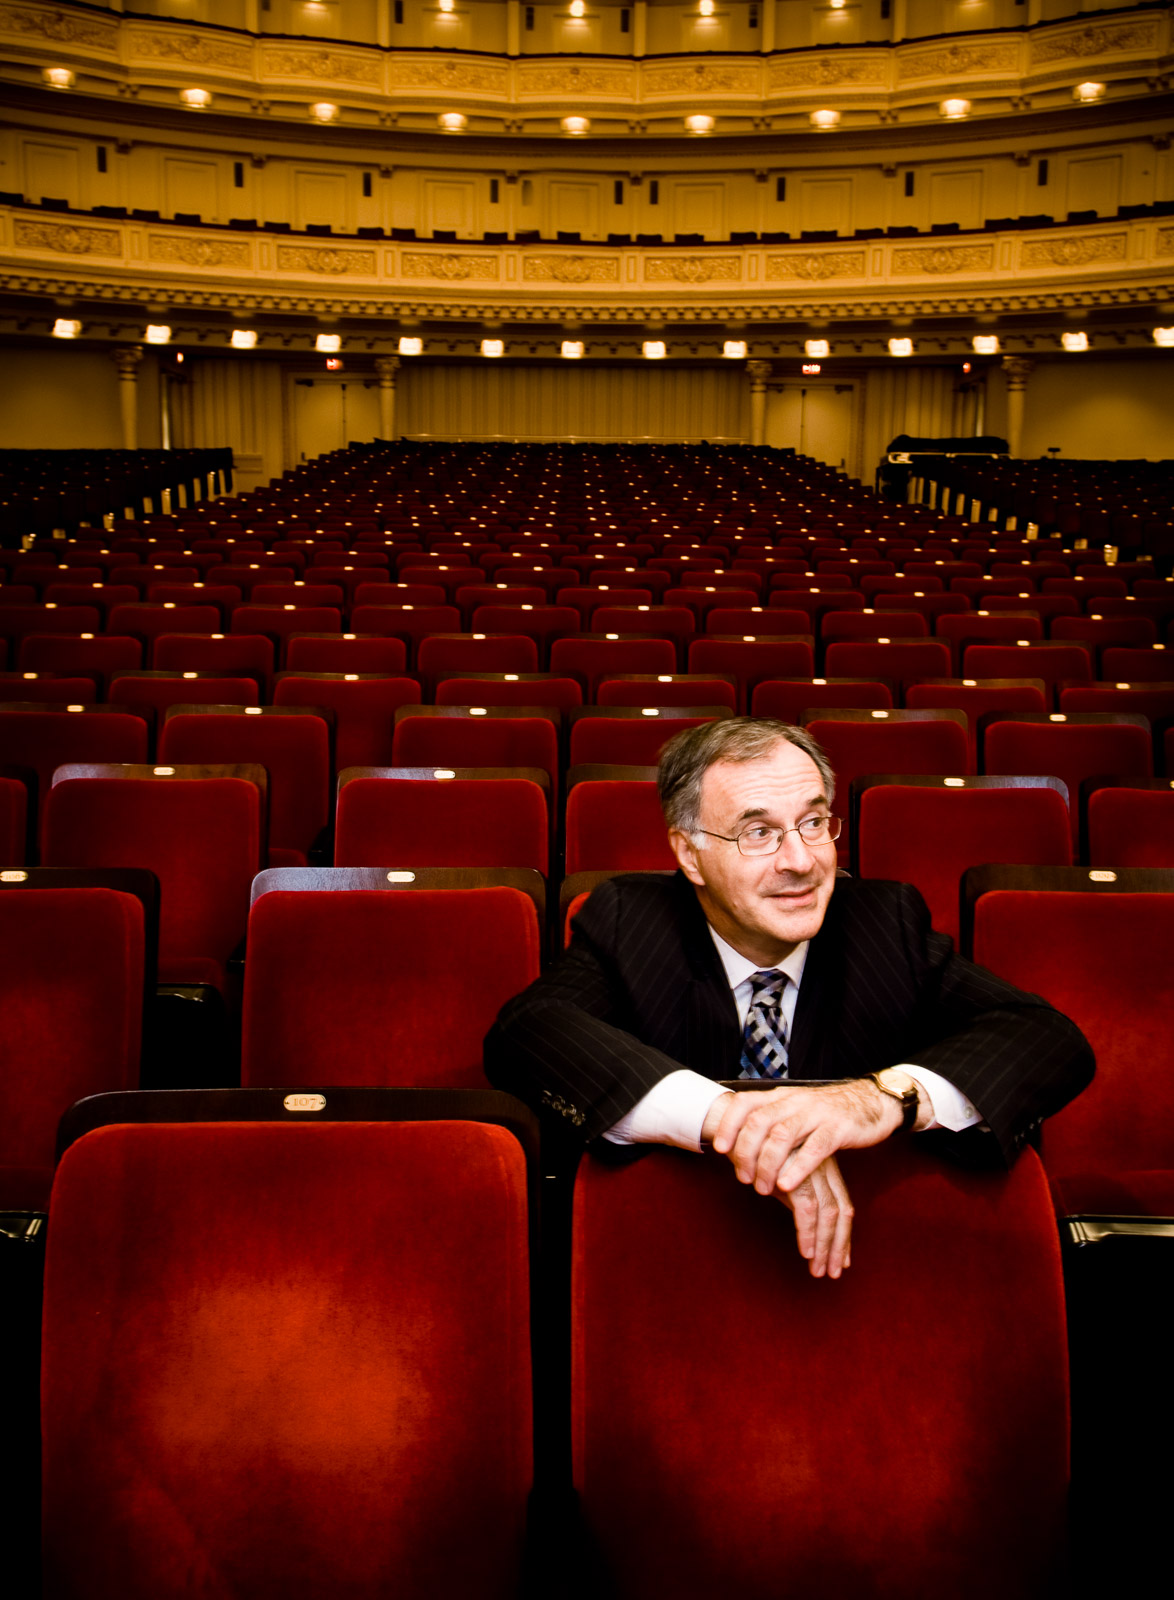 Sir Clive Gillinson / Director of Carnegie Hall